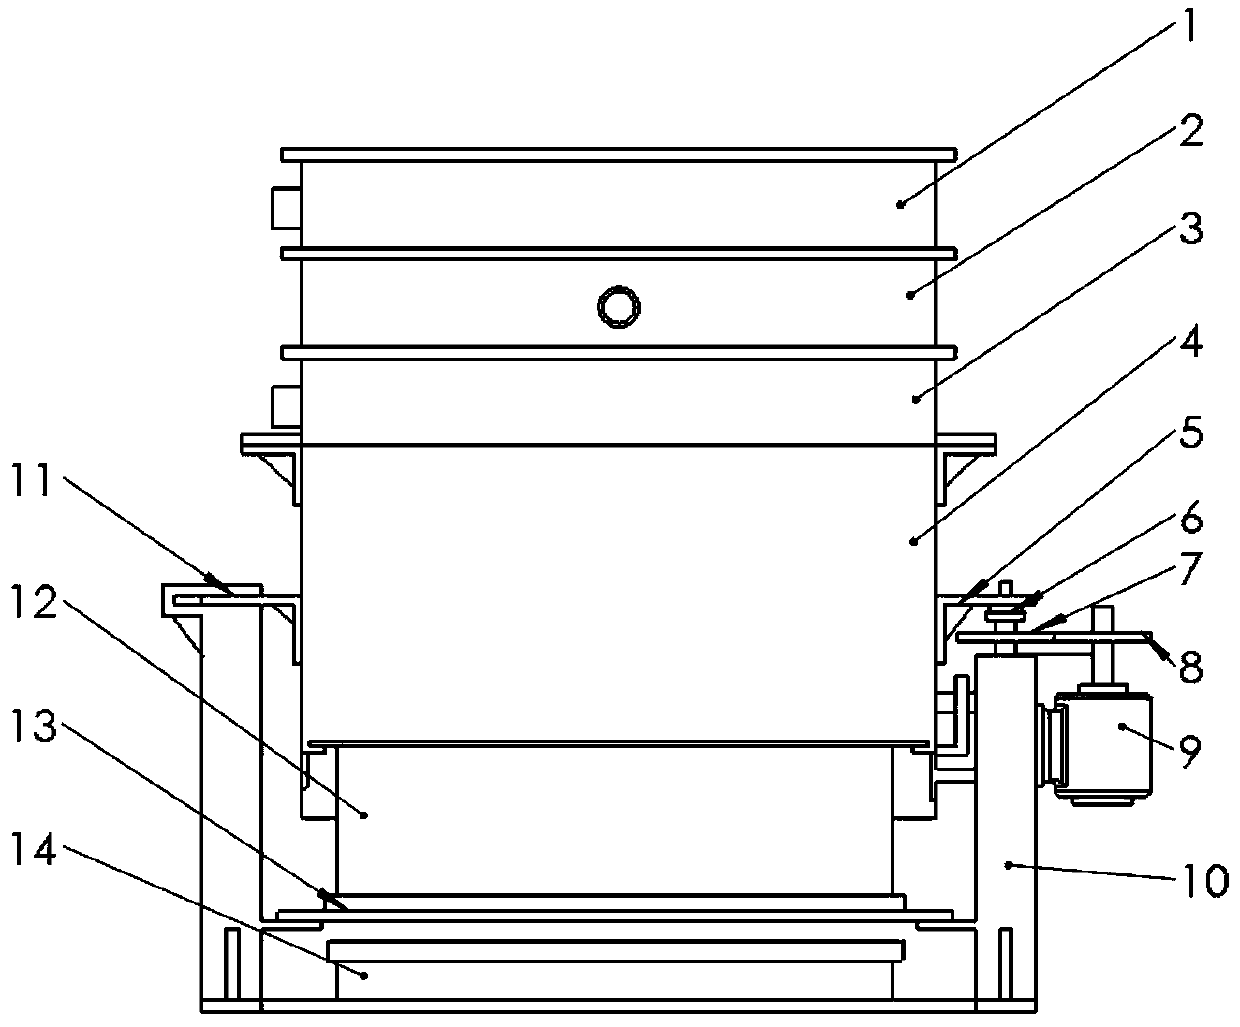 Mechanical sliding sheet translation type precise seeding mechanism